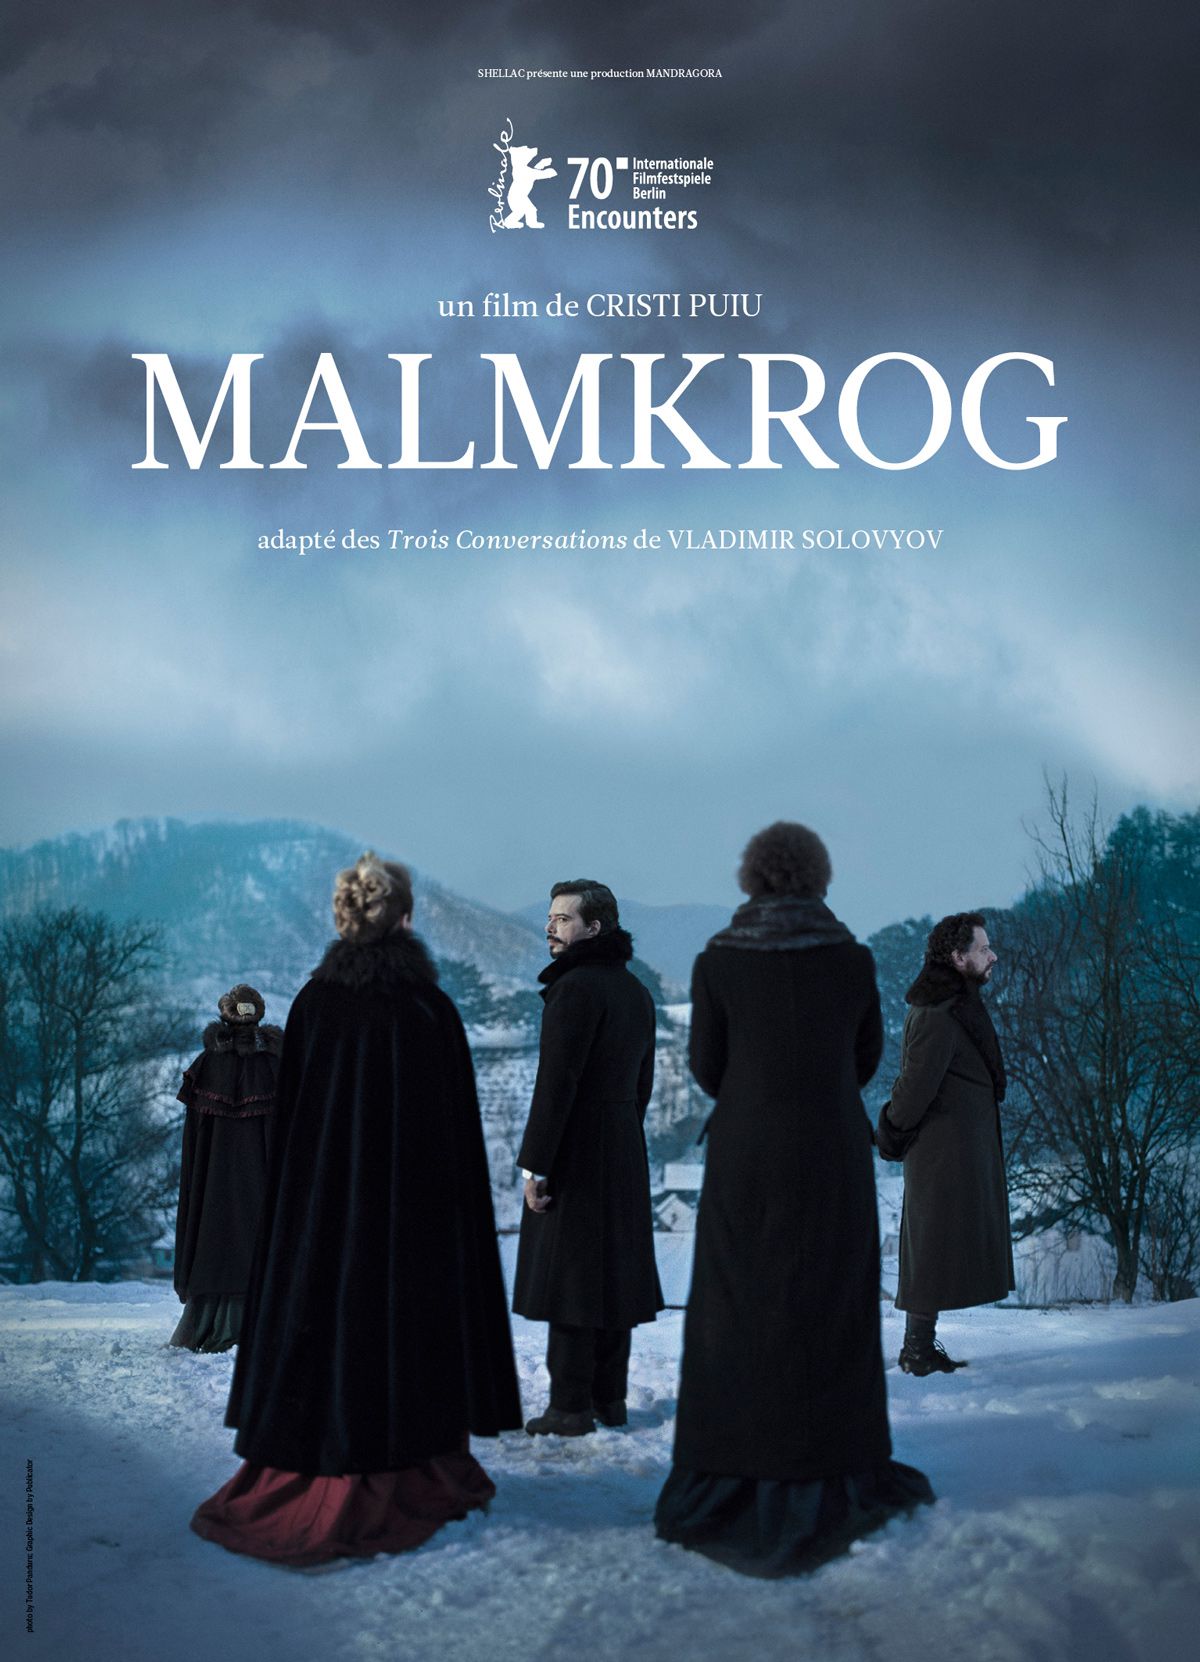 Malmkrog - Film (2020) streaming VF gratuit complet